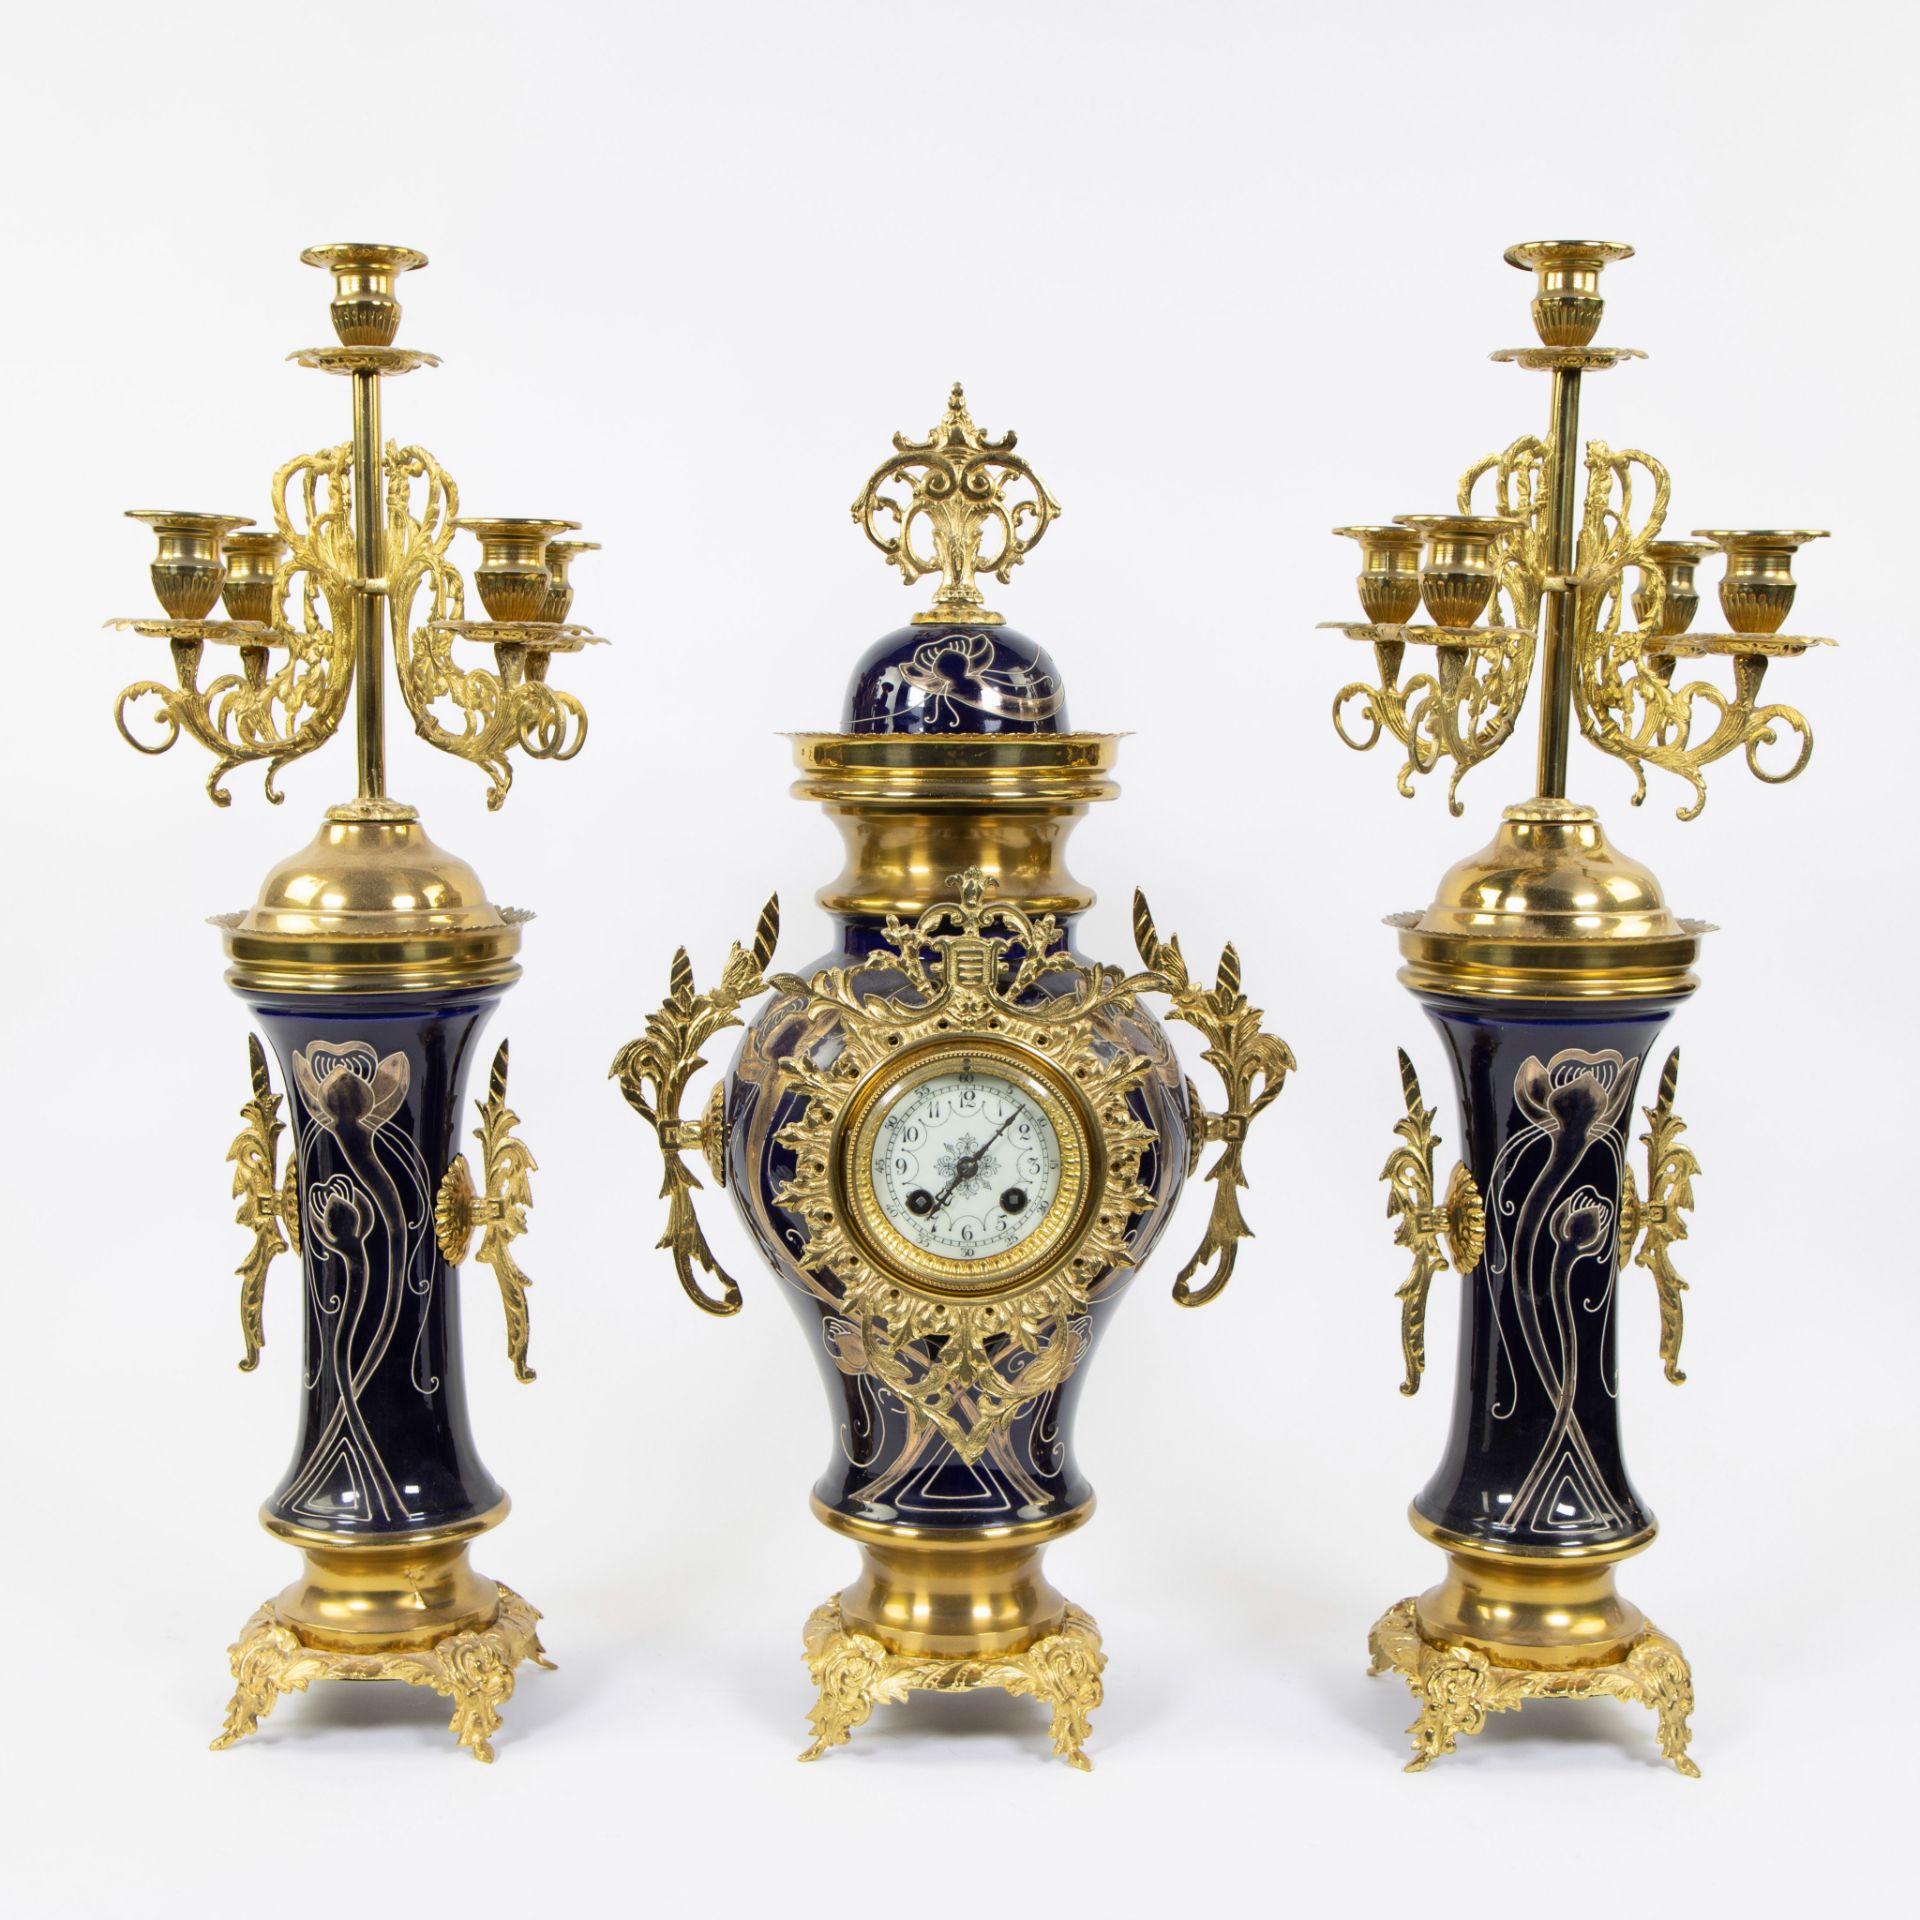 Three piece faience garnish decorated with stylized whiplash motifs and gilt brass, candlesticks wit